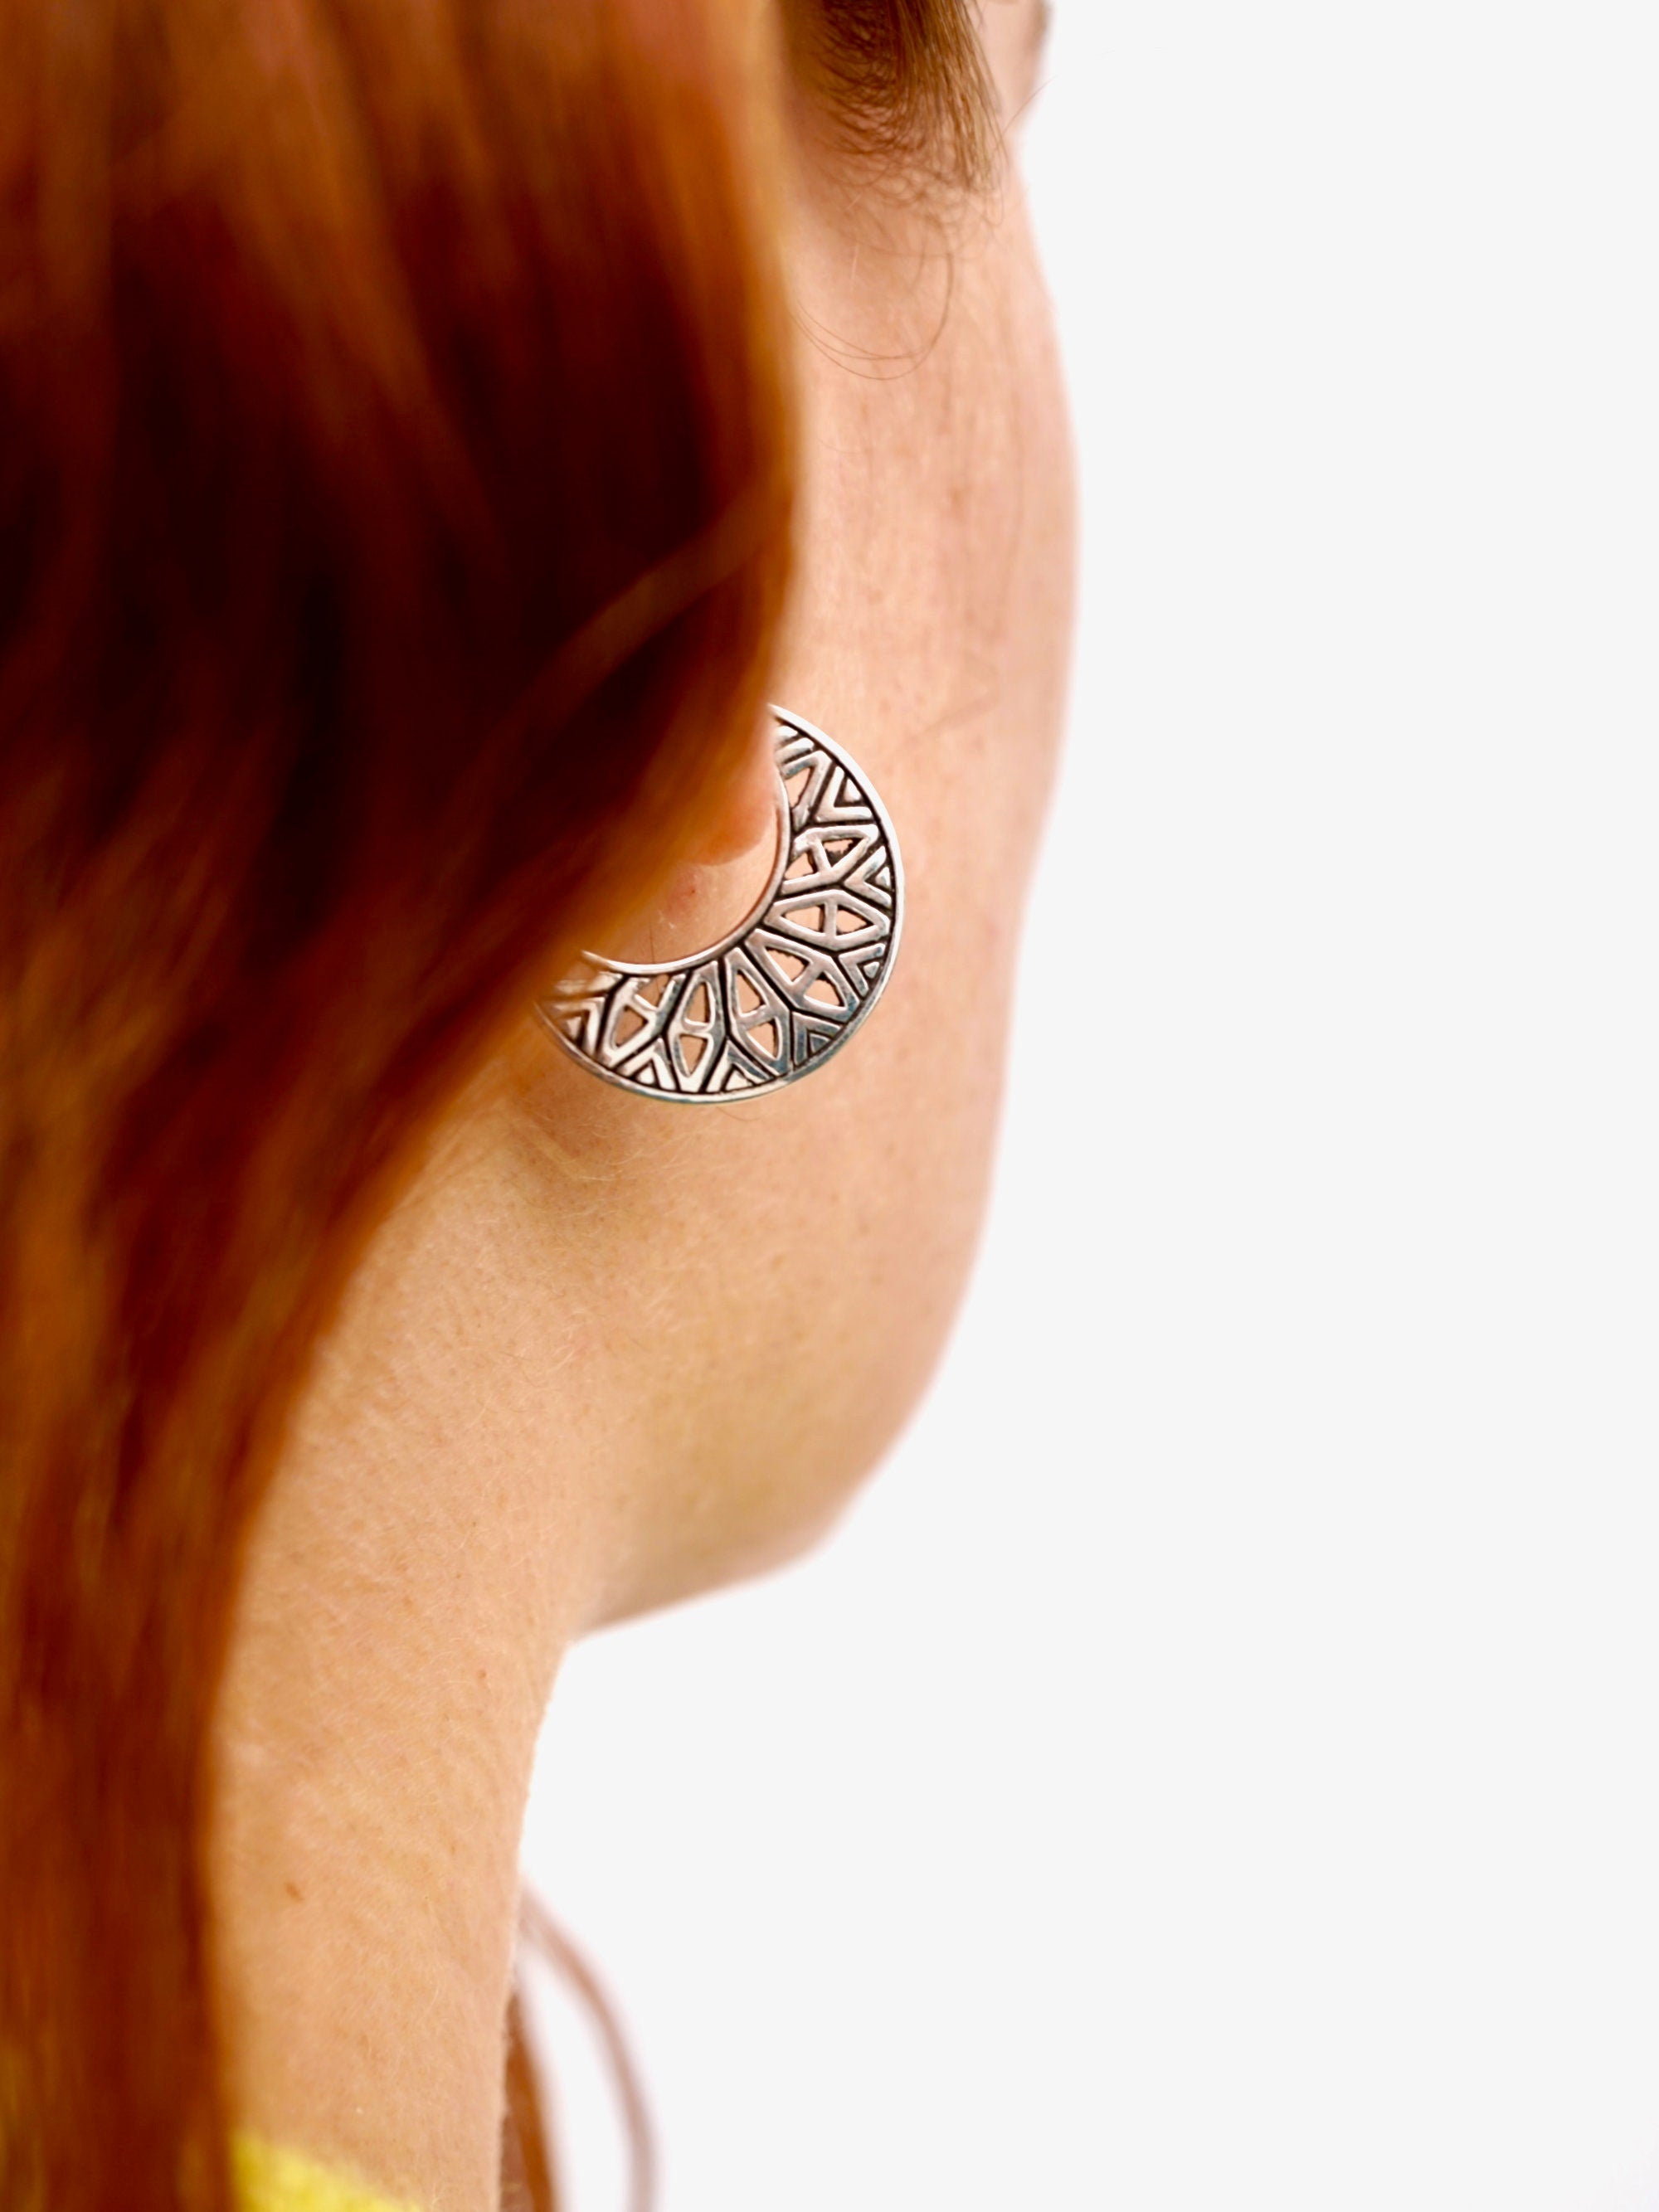 Half Moon Mandala Hoops Earrings Small - Solid Sterling Silver (302S)